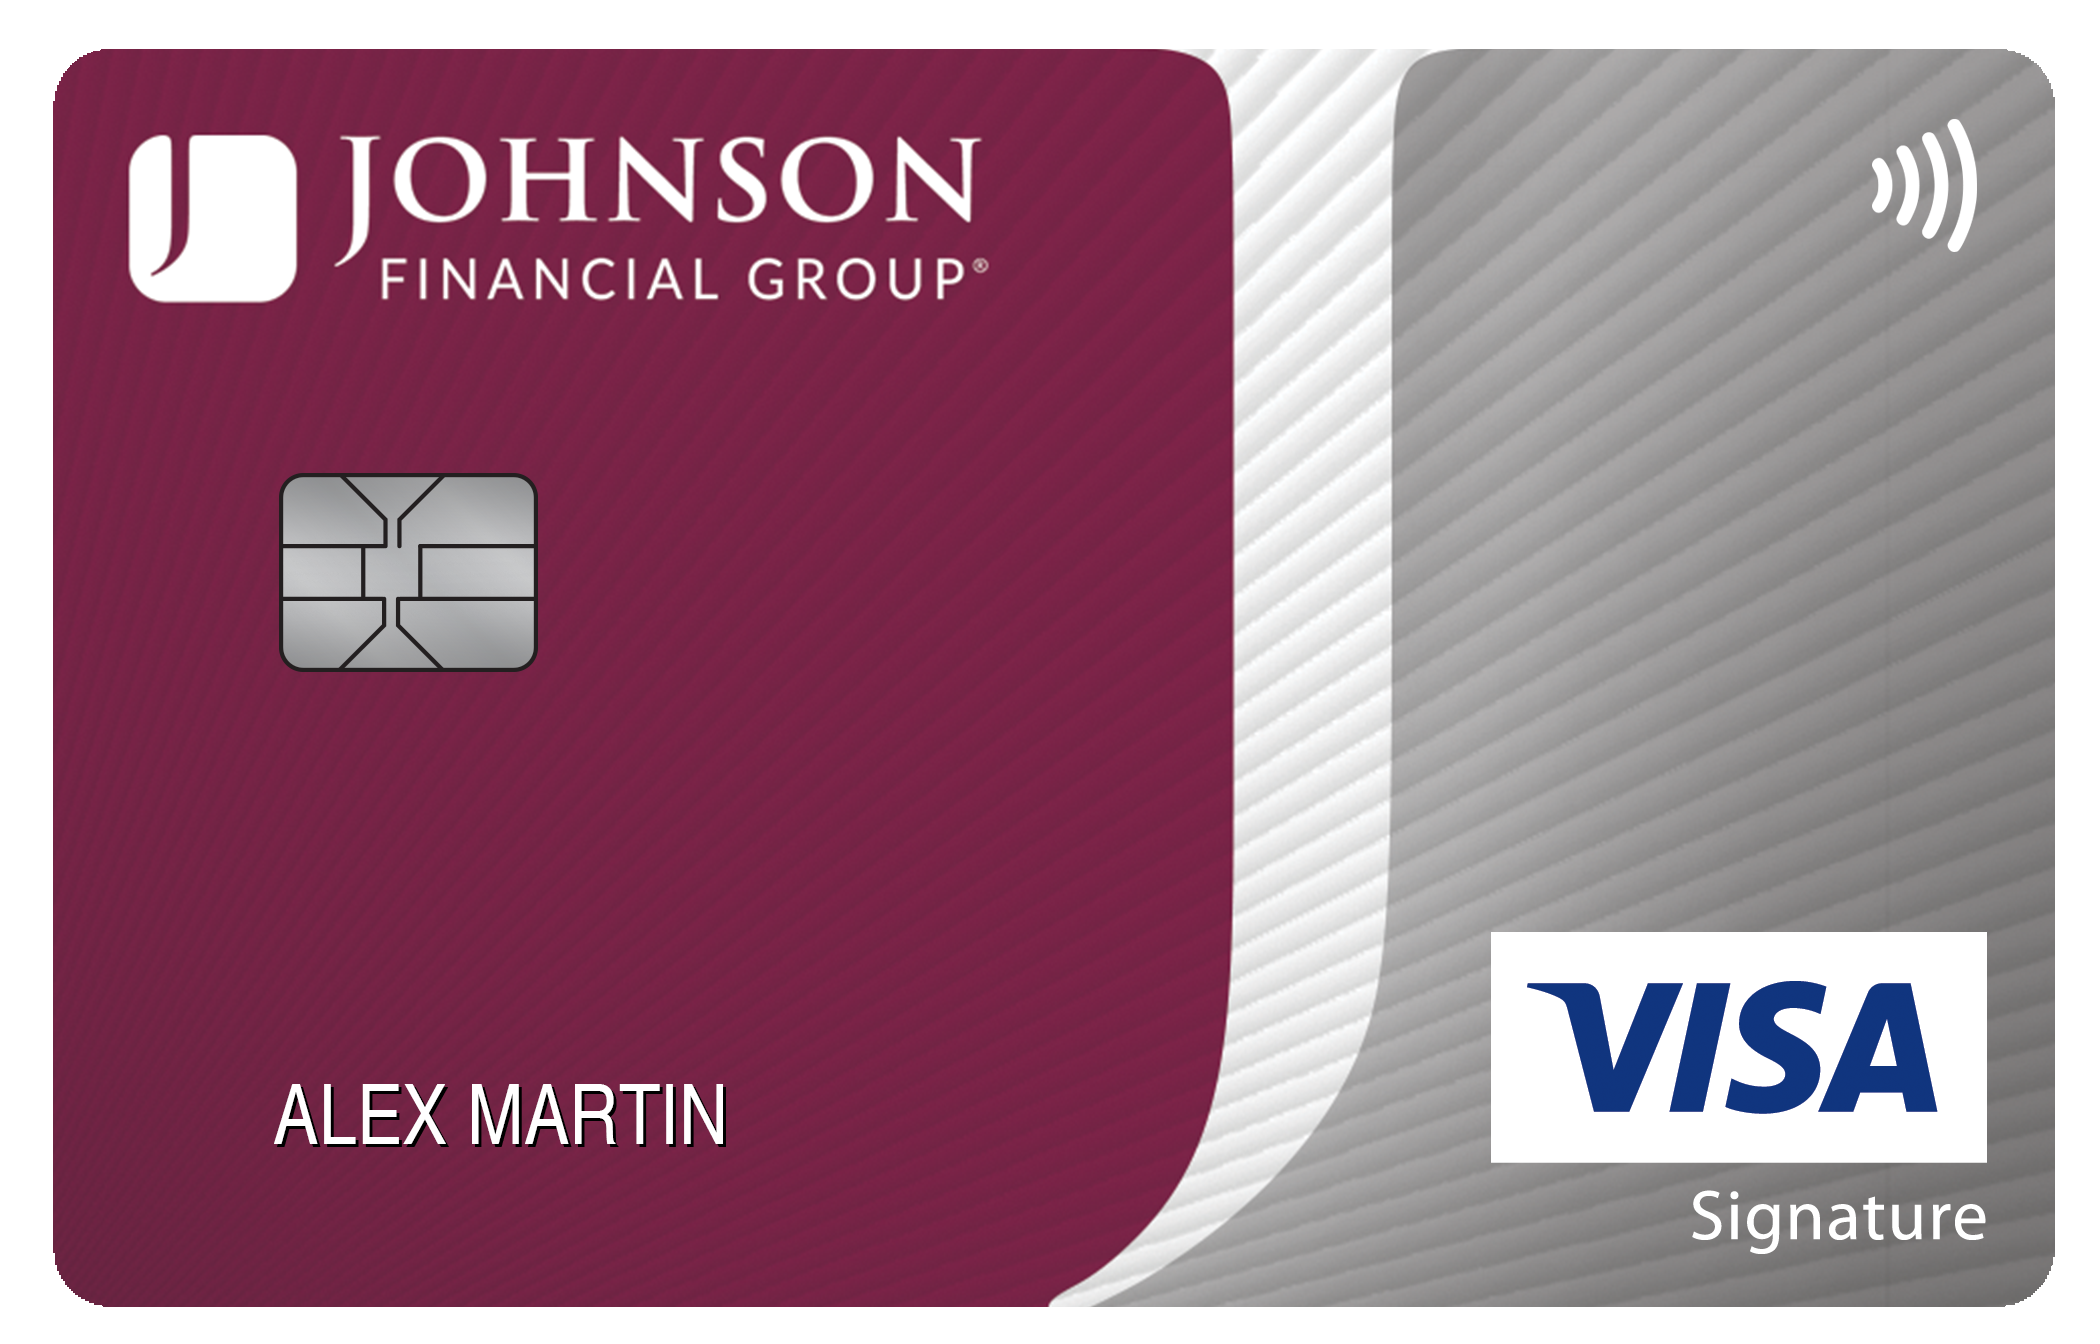 Johnson Financial Group Travel Rewards+ Card